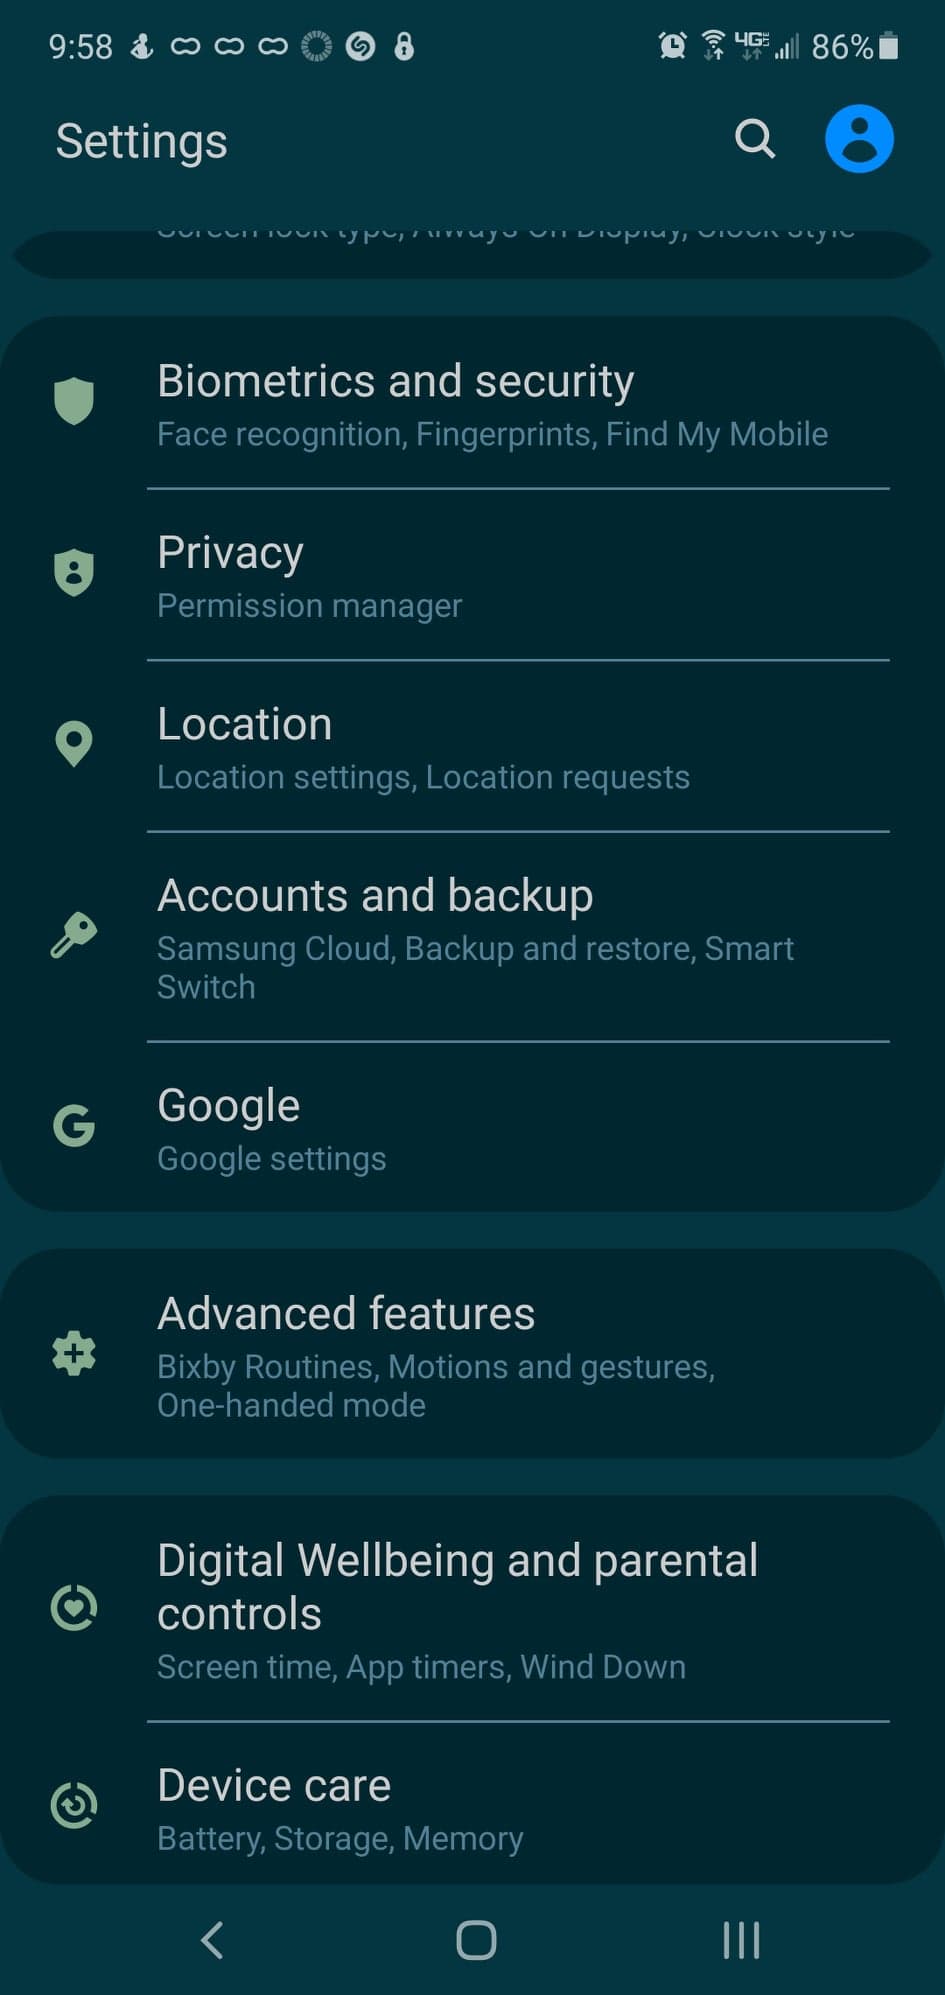 Google Smart Lock on the App Store